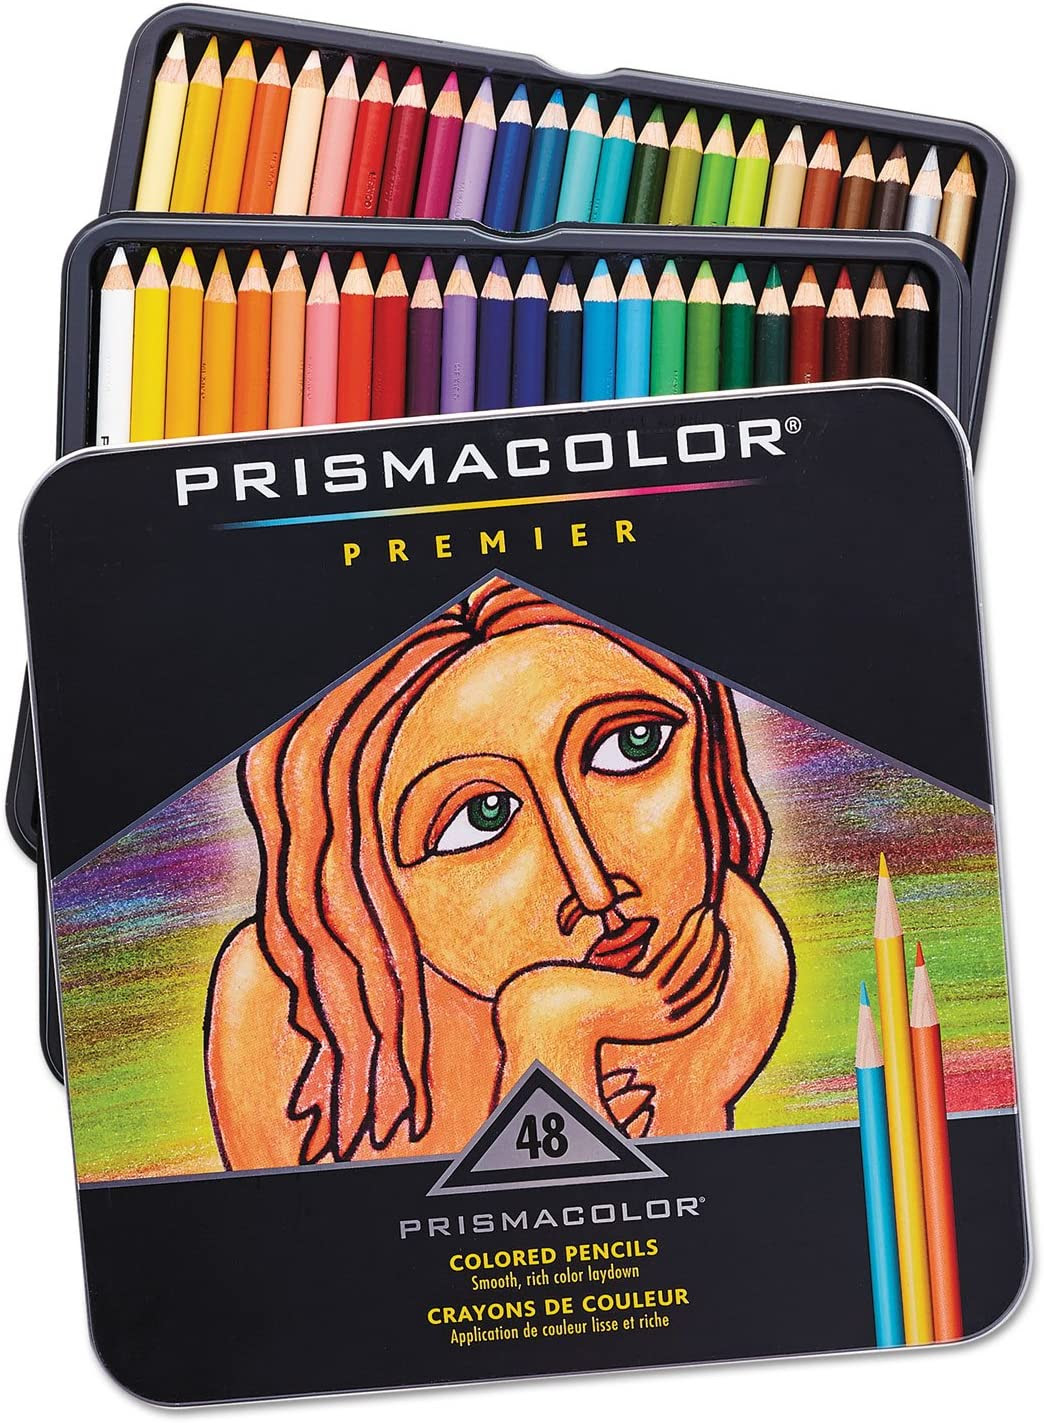 Prismacolor Premier Colored Pencils 48Pack. 4000 packs. EXW Los Angeles $7.99/pack.